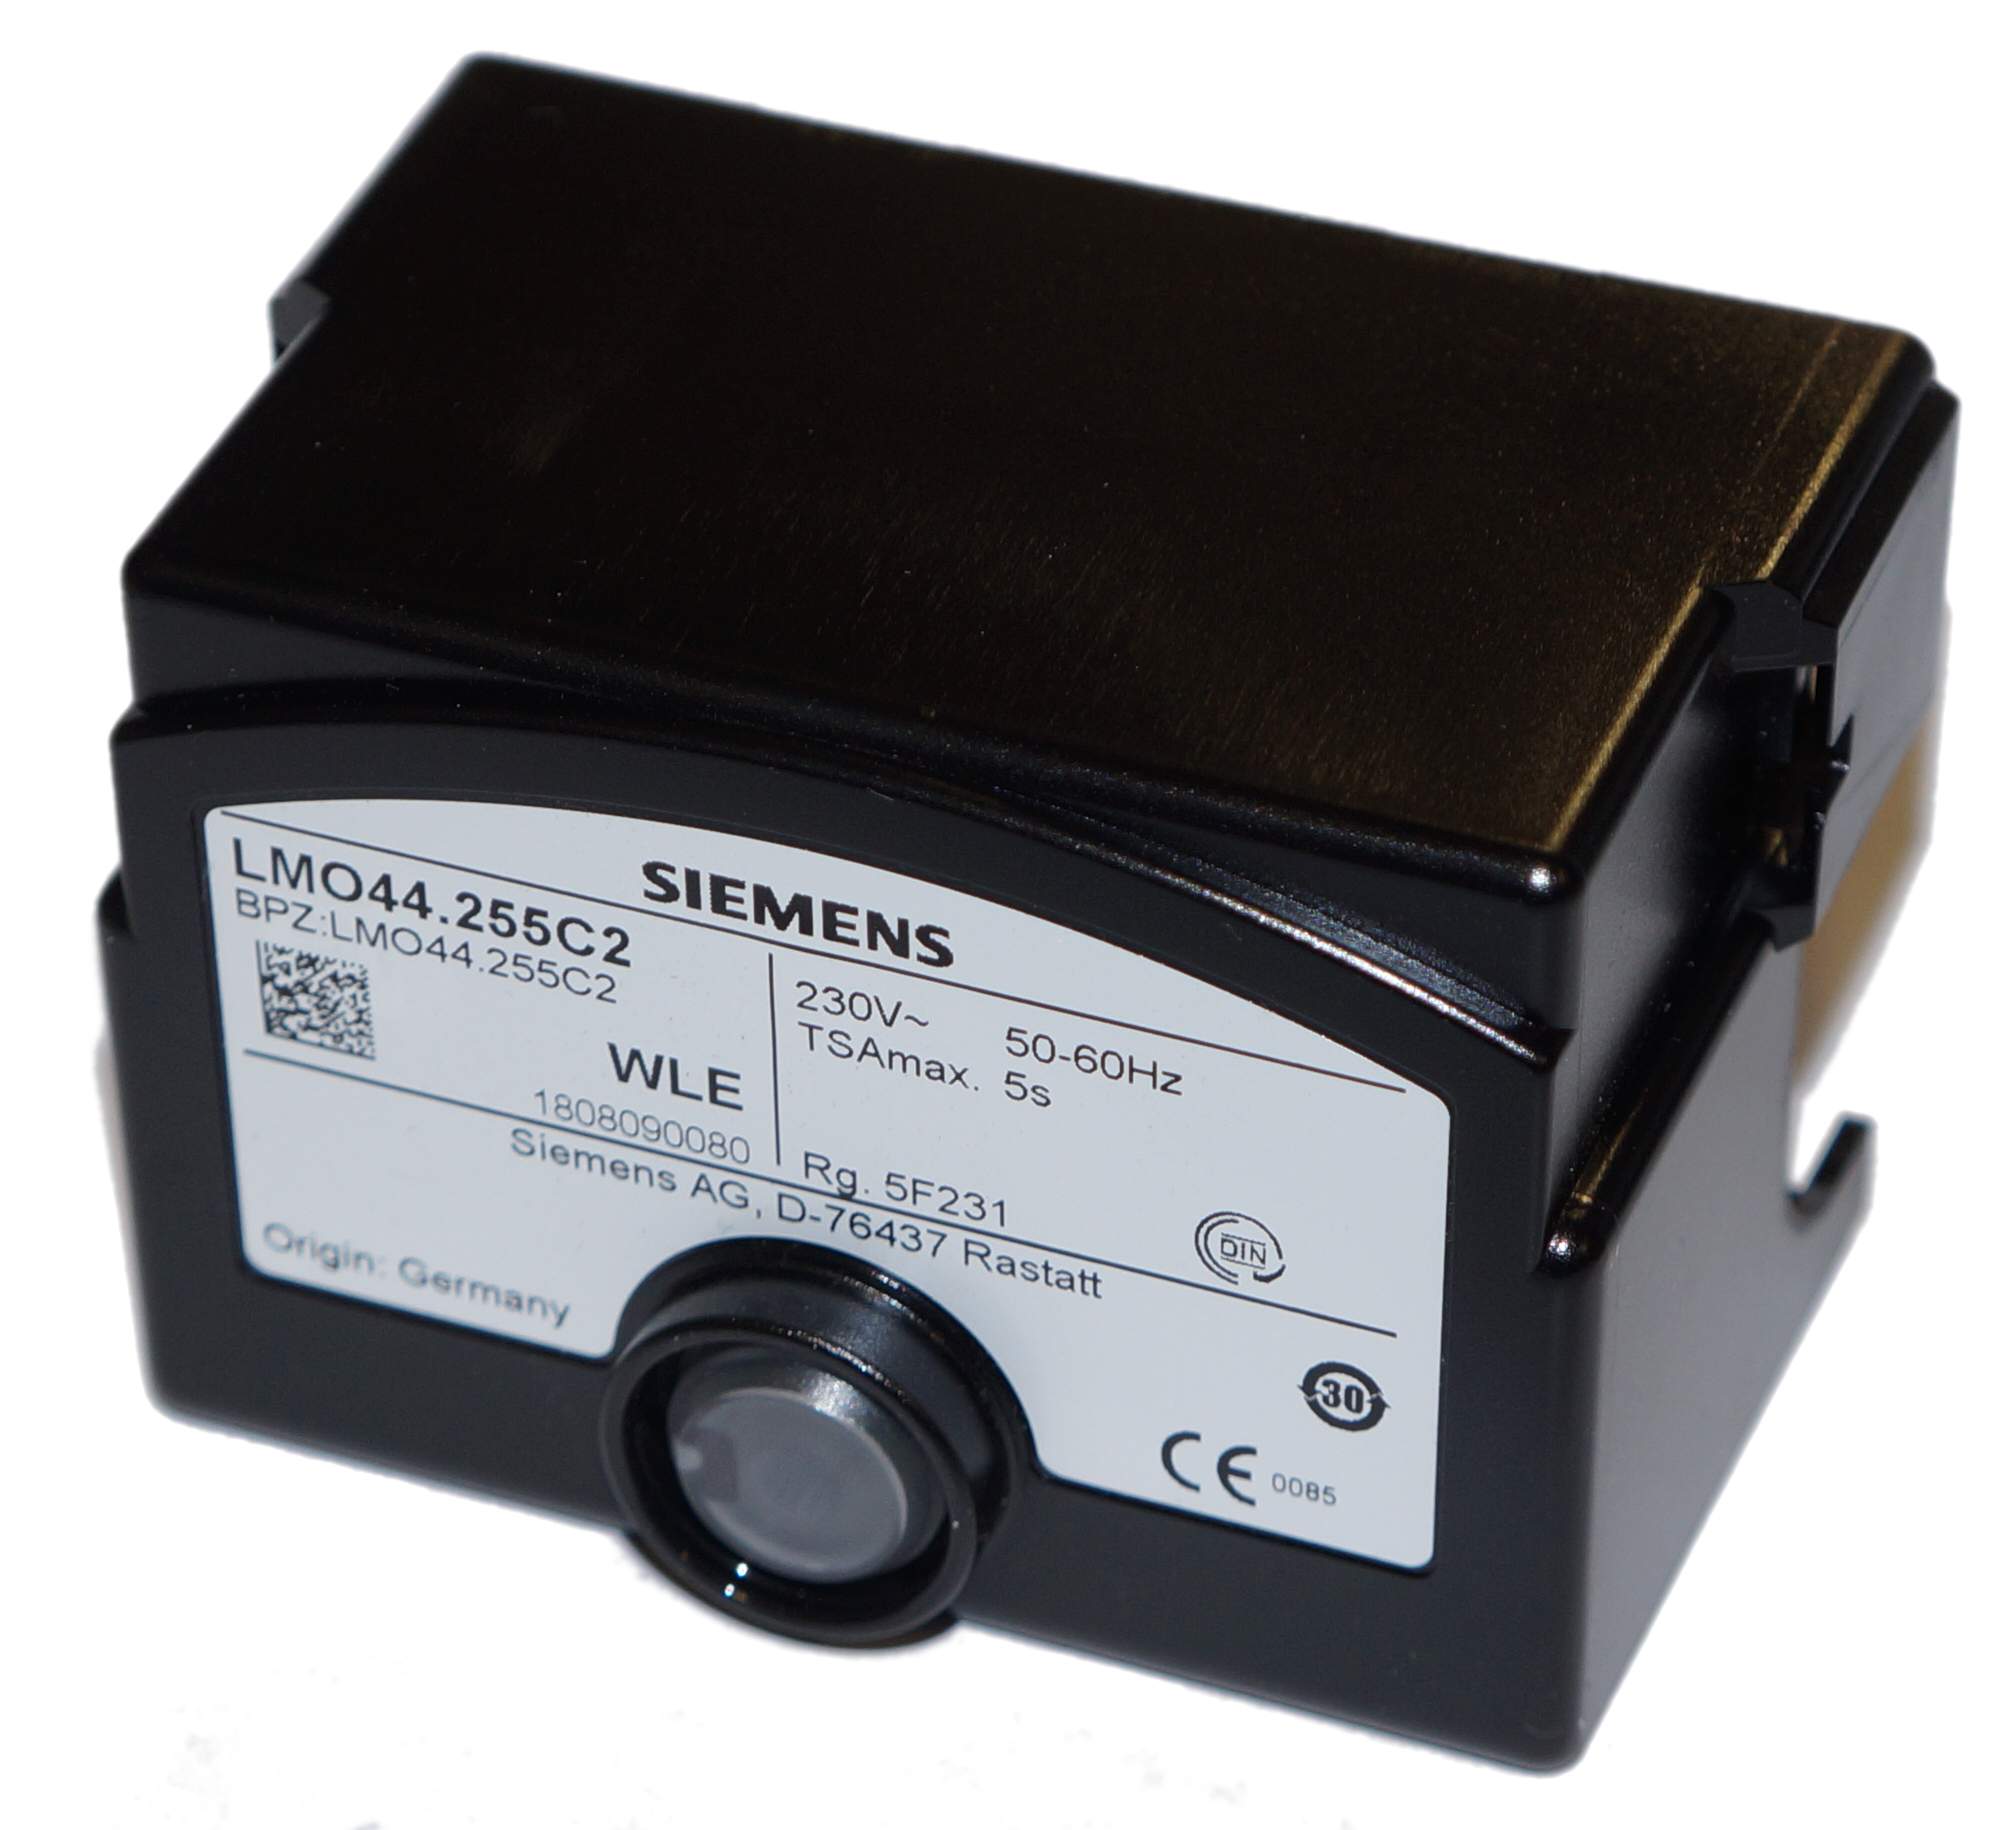 Relé Siemens LMO44.255 C2